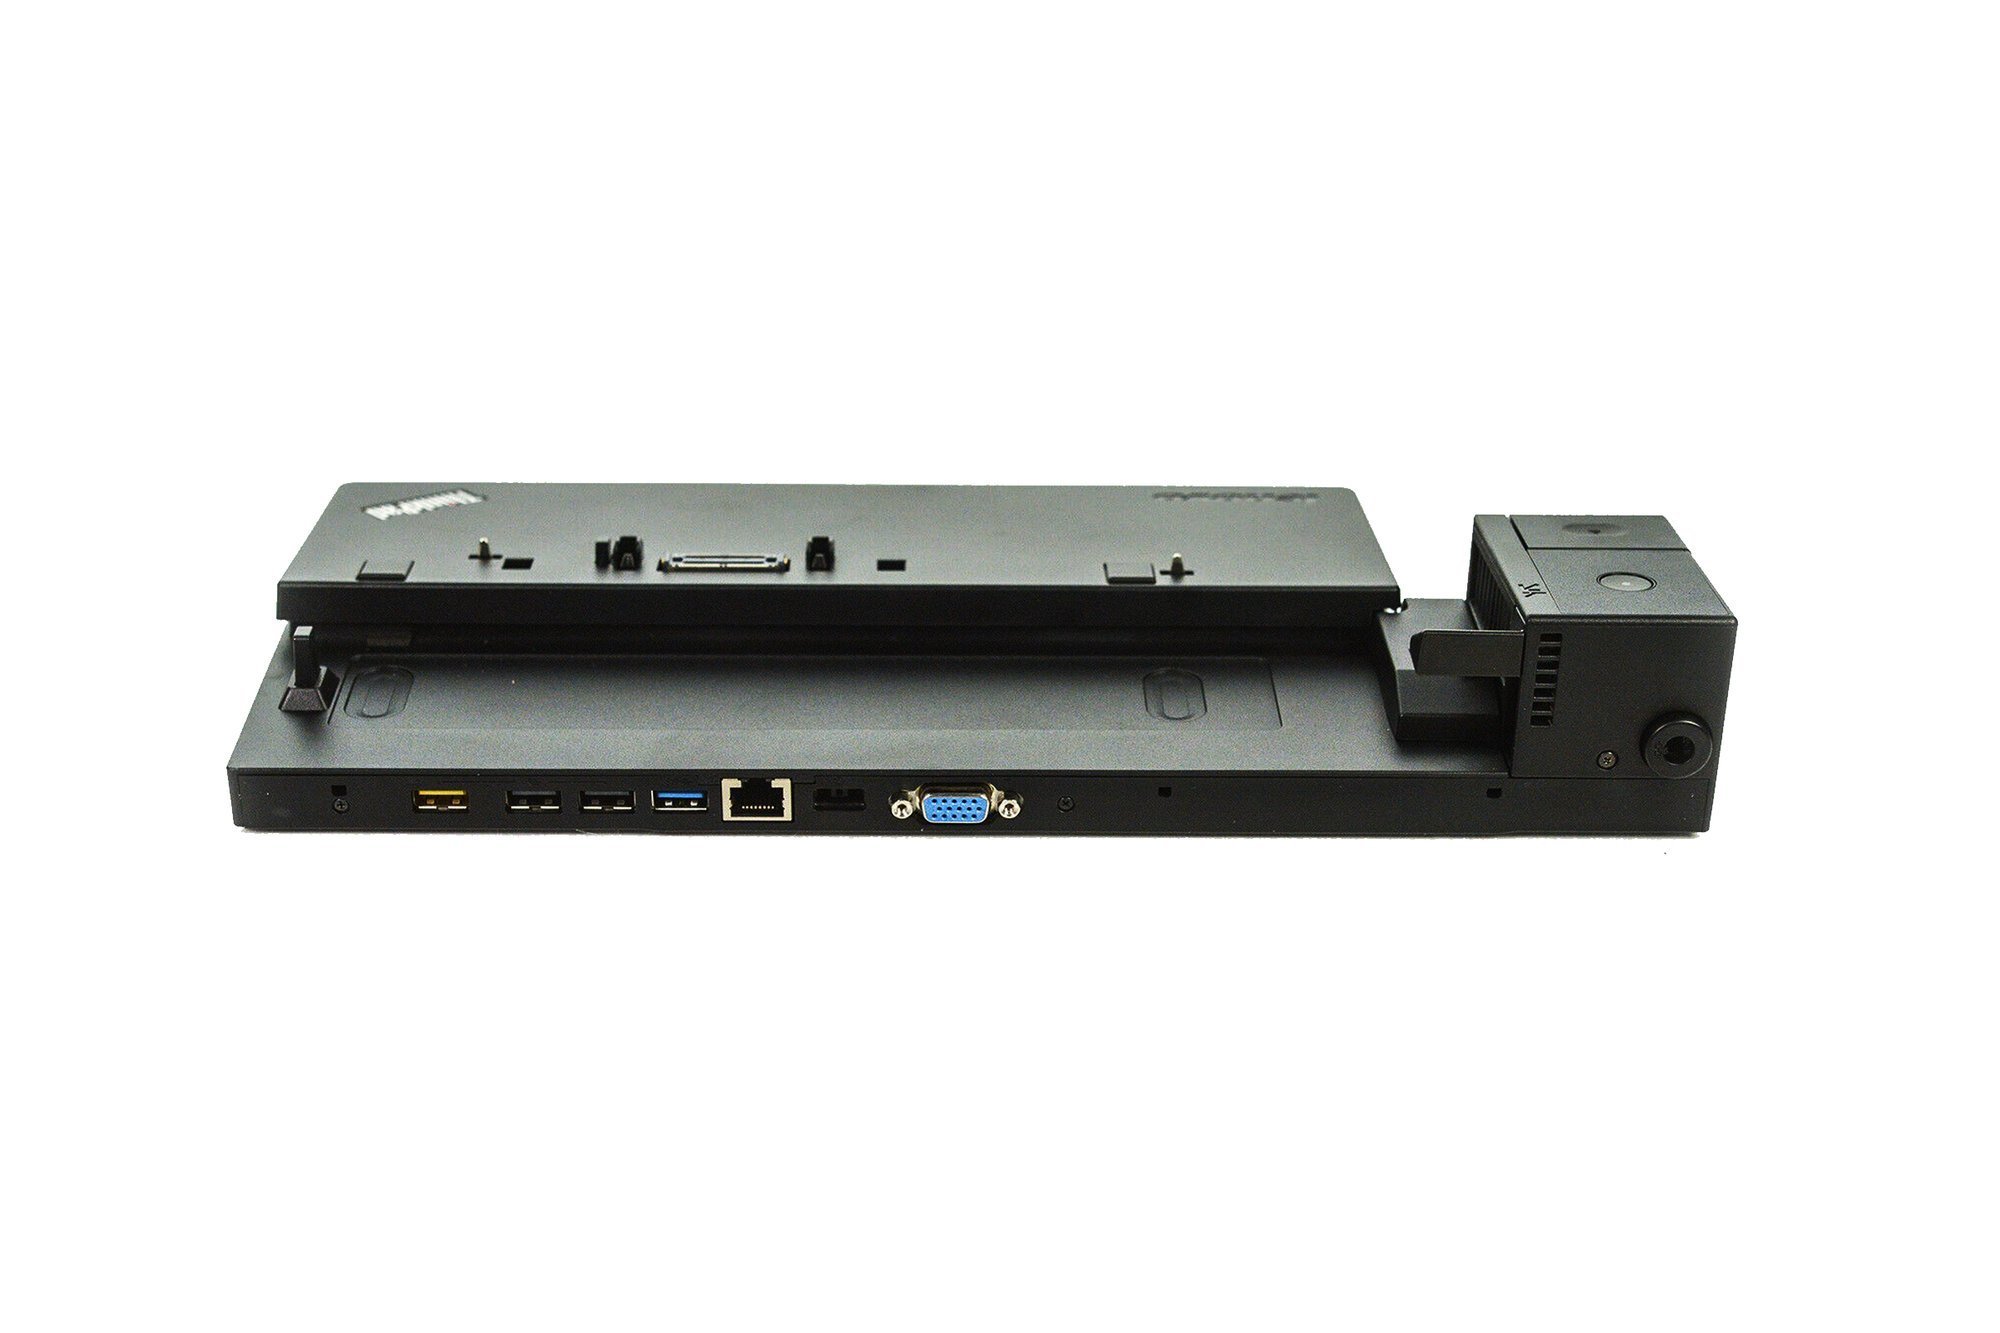 Lenovo ThinkPad Basic Dock 40A0 Docking Station